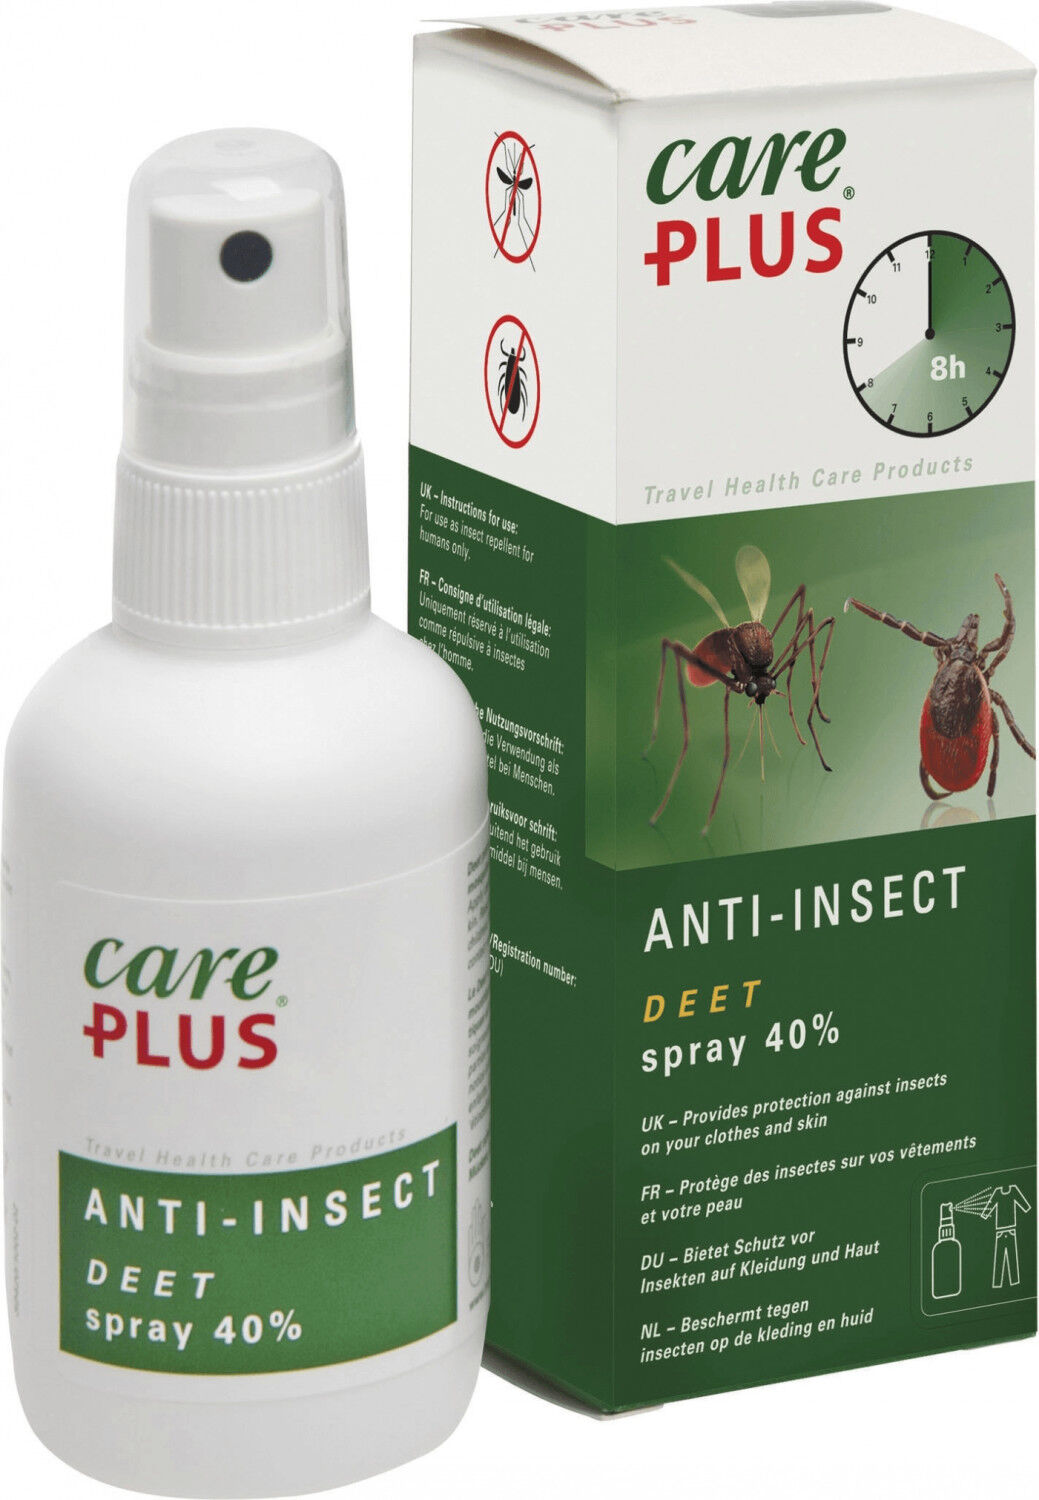 Care Plus Anti-Insect - Deet spray 40% - Produkty przeciw insektom | Hardloop